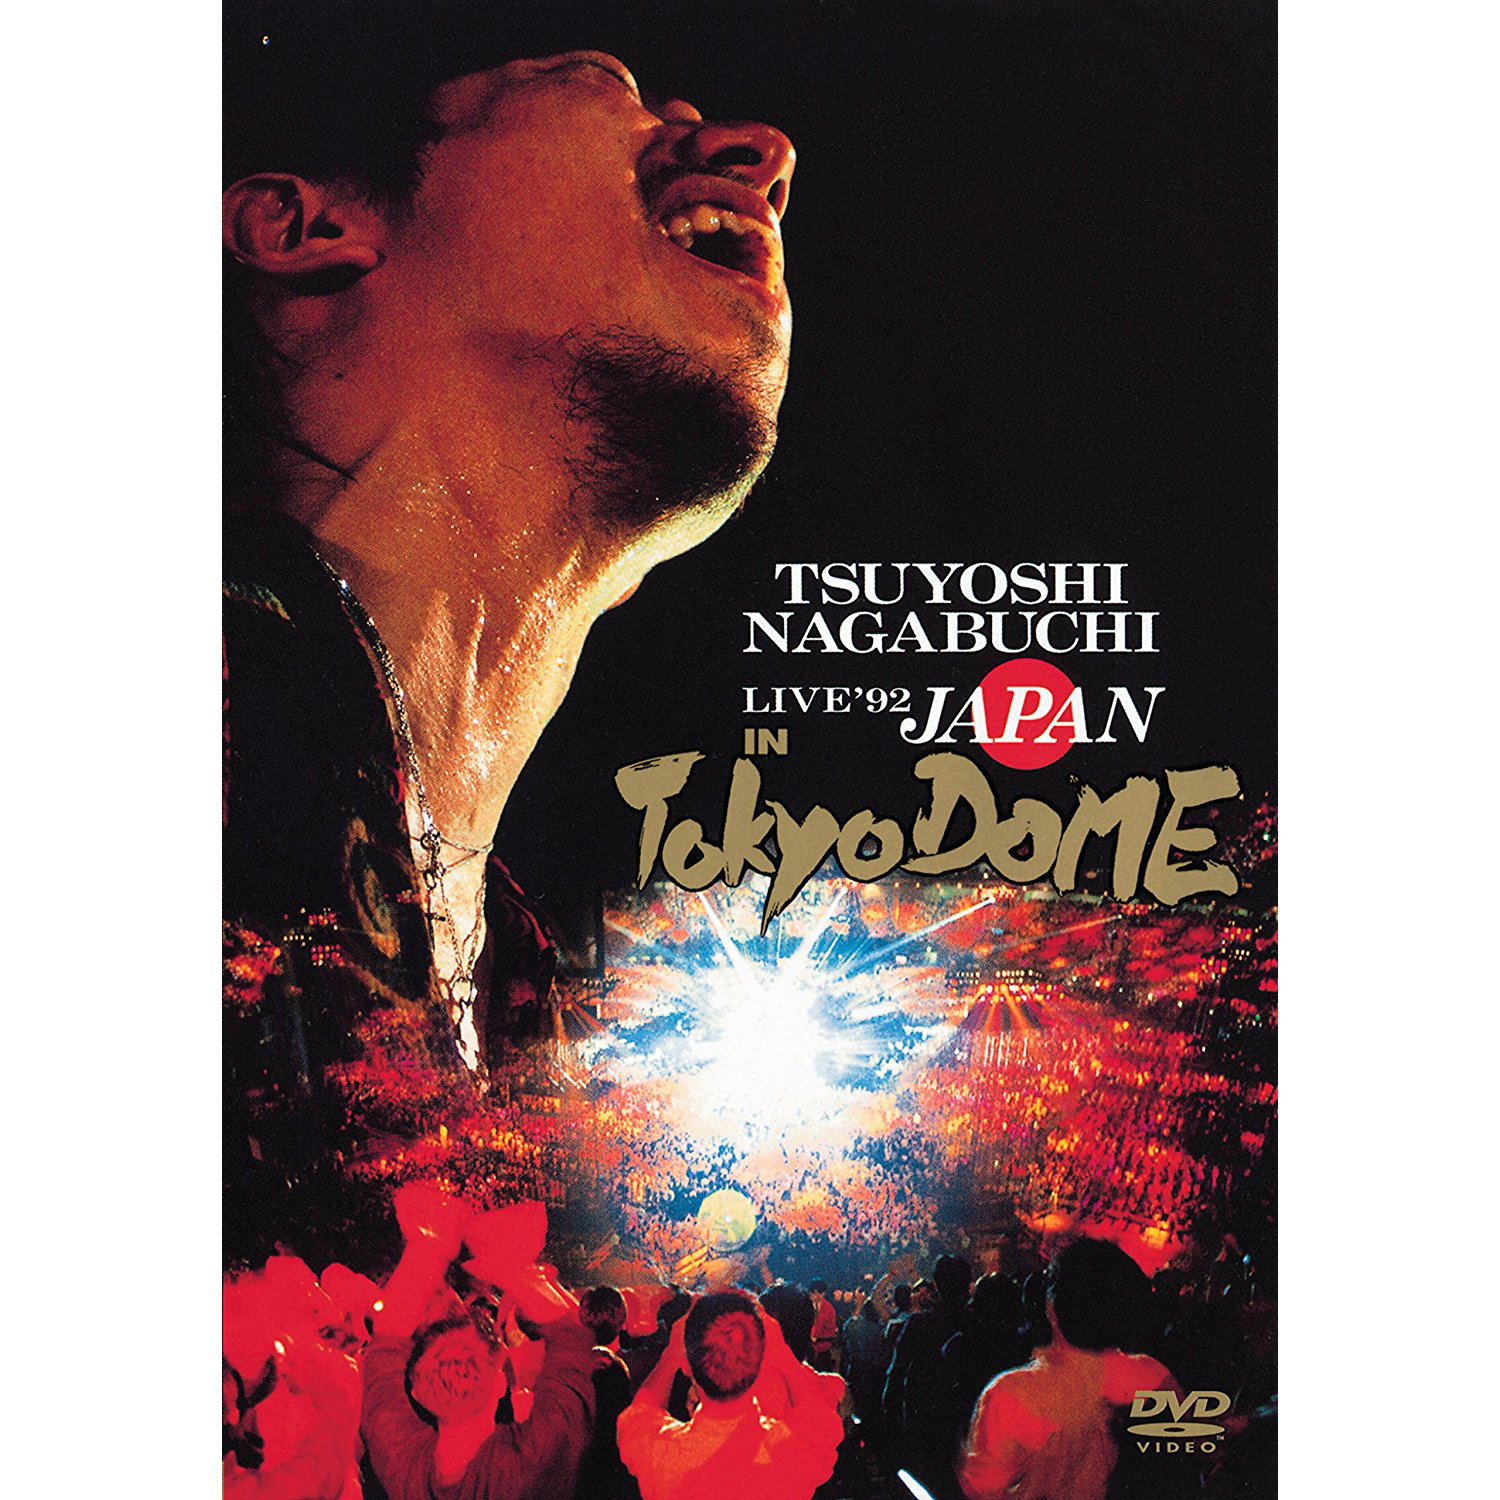 Tsuyoshi Nagabuchi Live '92 Japan In Tokyo Dome [Limited Edition]